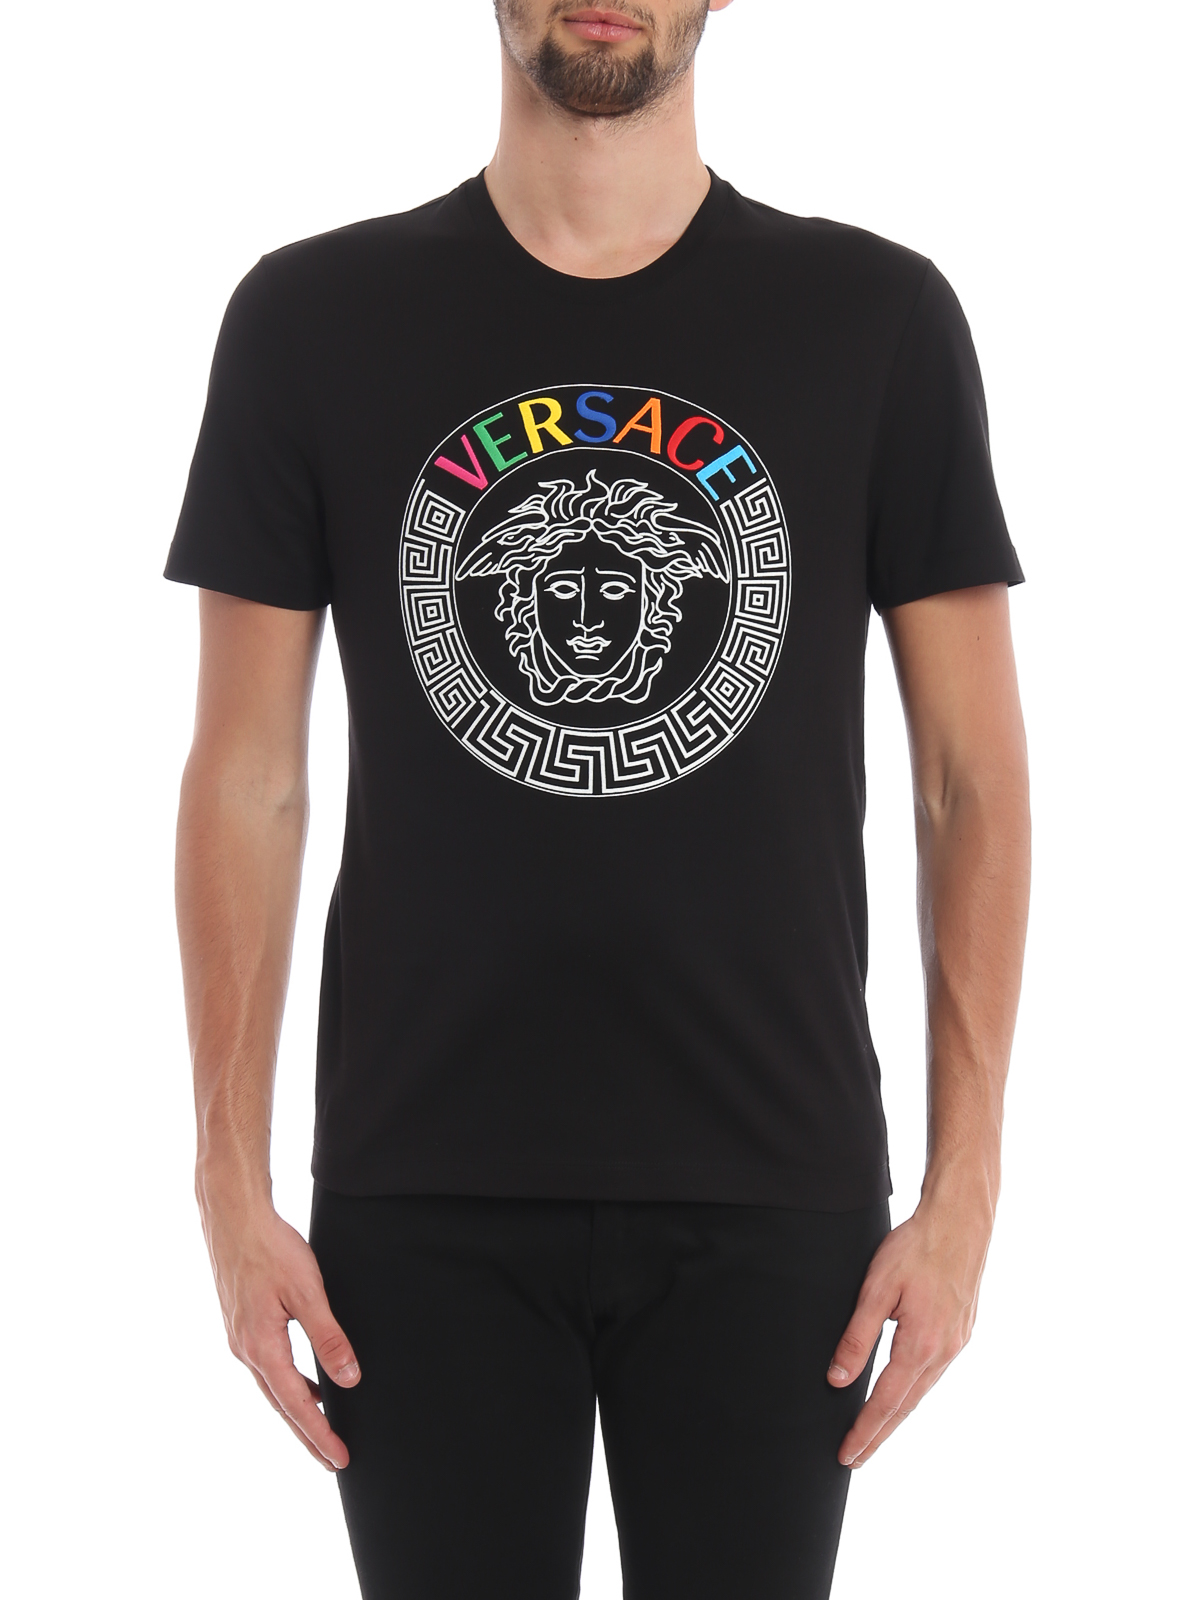 versace rainbow shirt